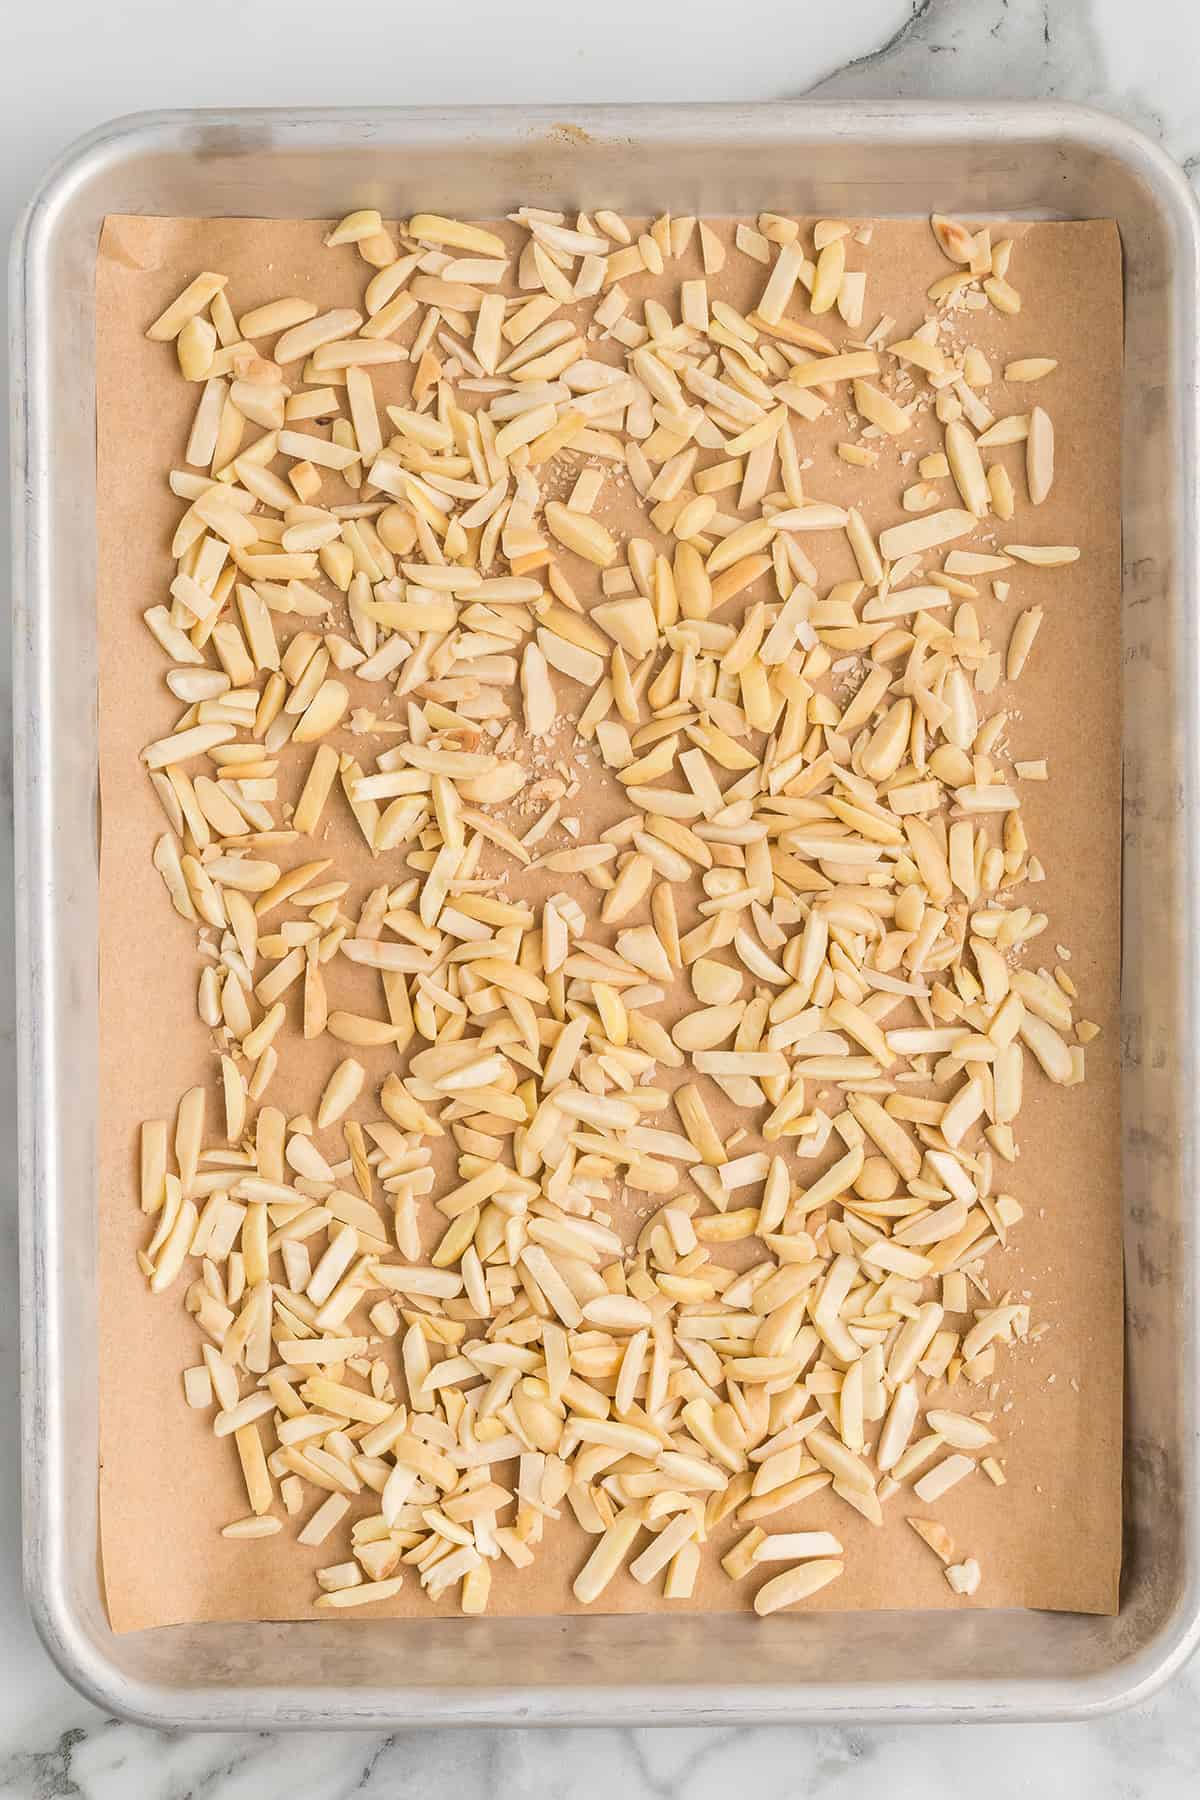 Slivered almonds on a baking sheet.